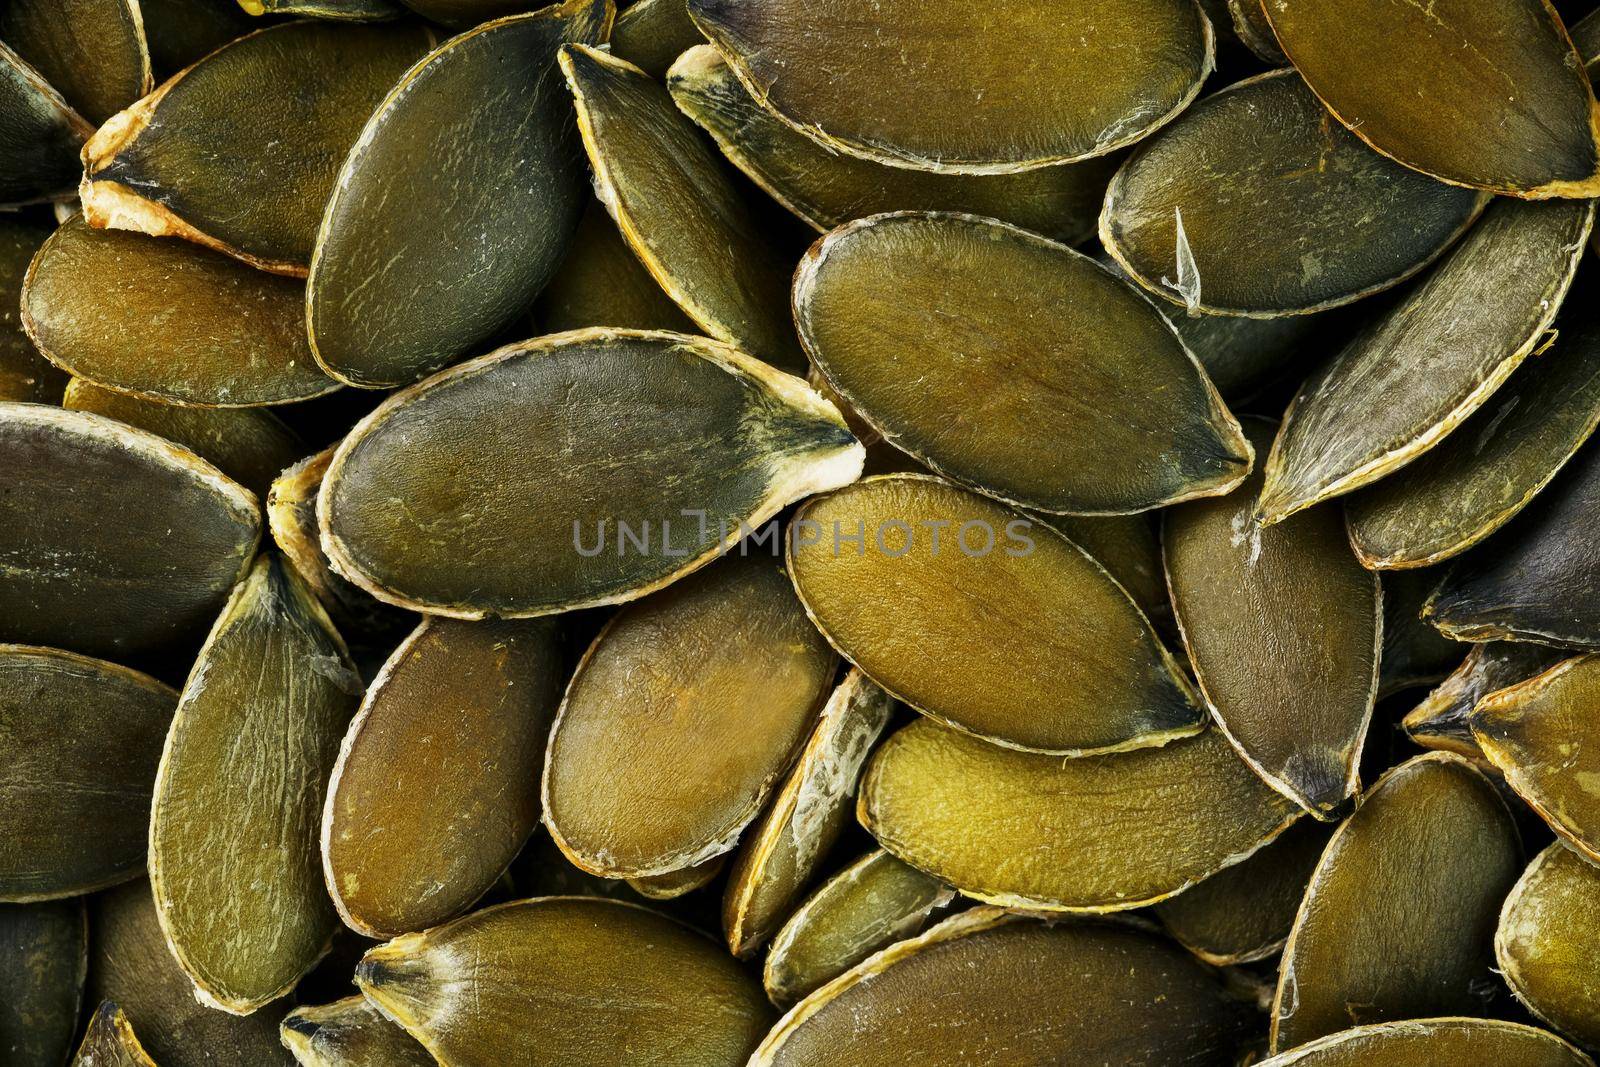 Macro background texture of green pumpkin seeds. Organic vegan food.